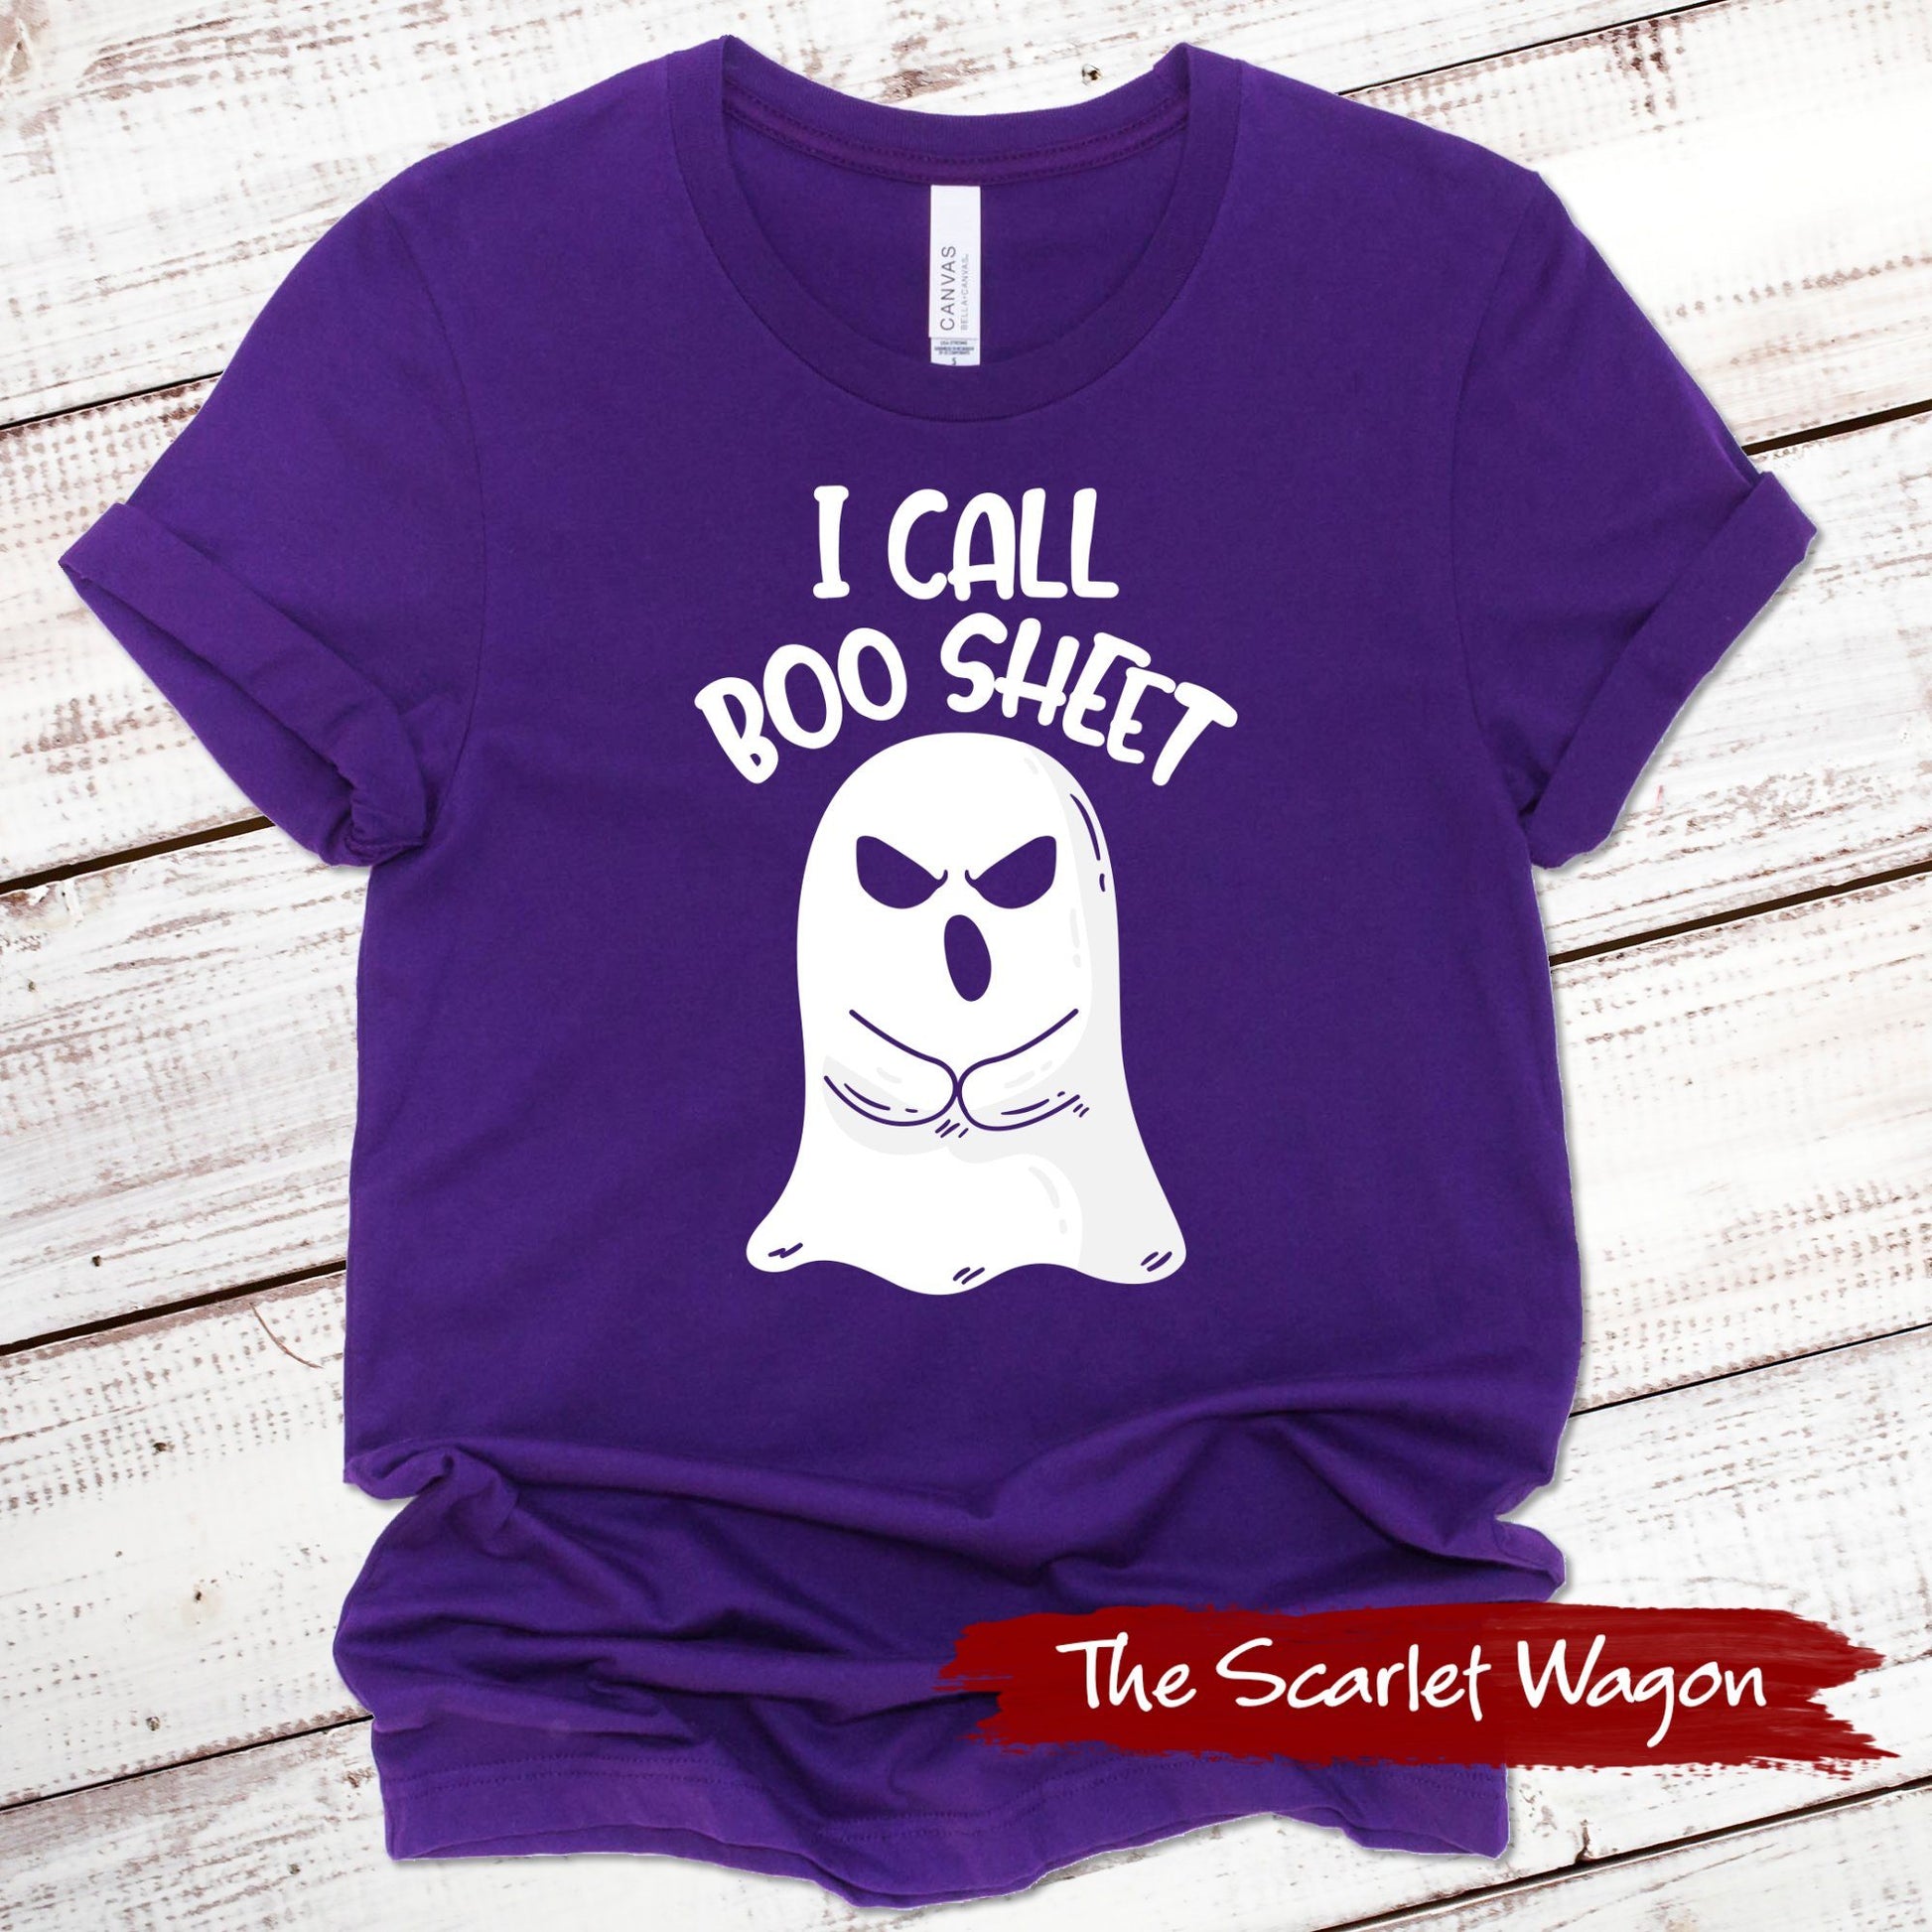 I Call Boo Sheet Halloween Shirt Scarlet Wagon Purple XS 